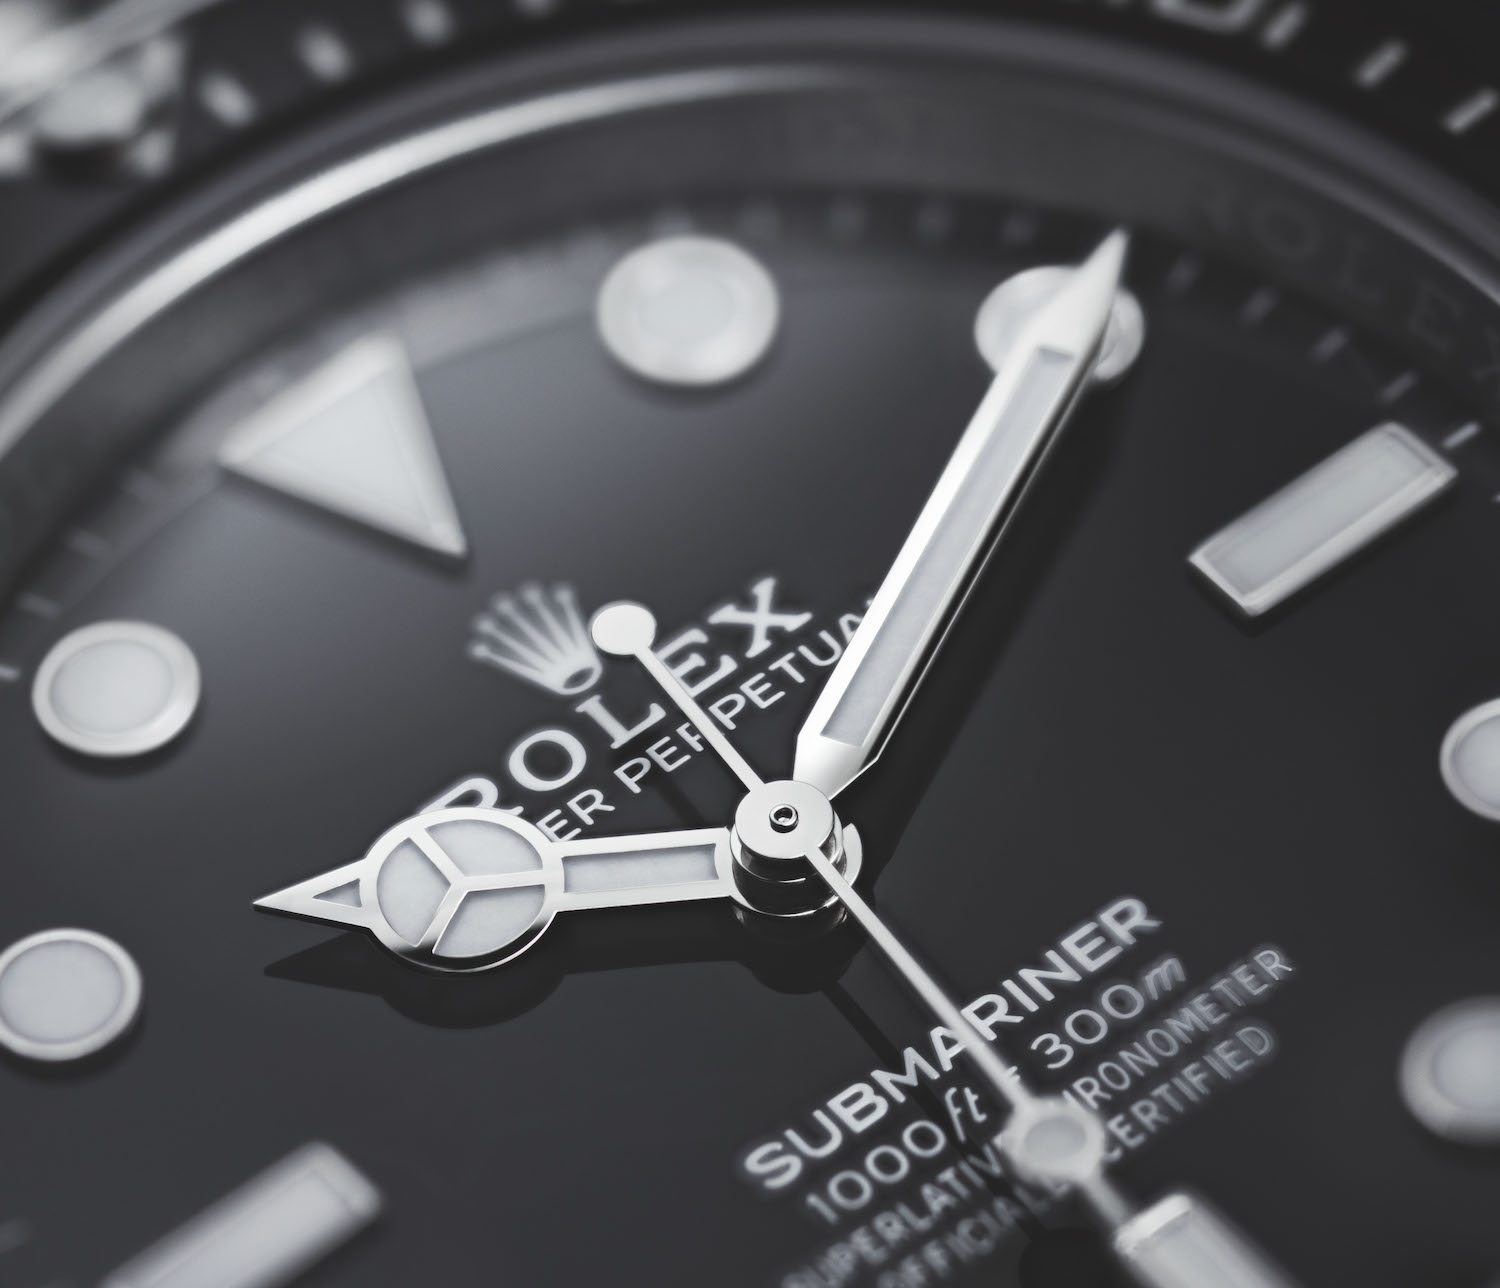 M124060 0001 2001ac 007 M1 copy - slider, accessories - The Rolex Submariner - watch, Timepiece, Submariner, Rolex, Accessories - The Rolex Submariner